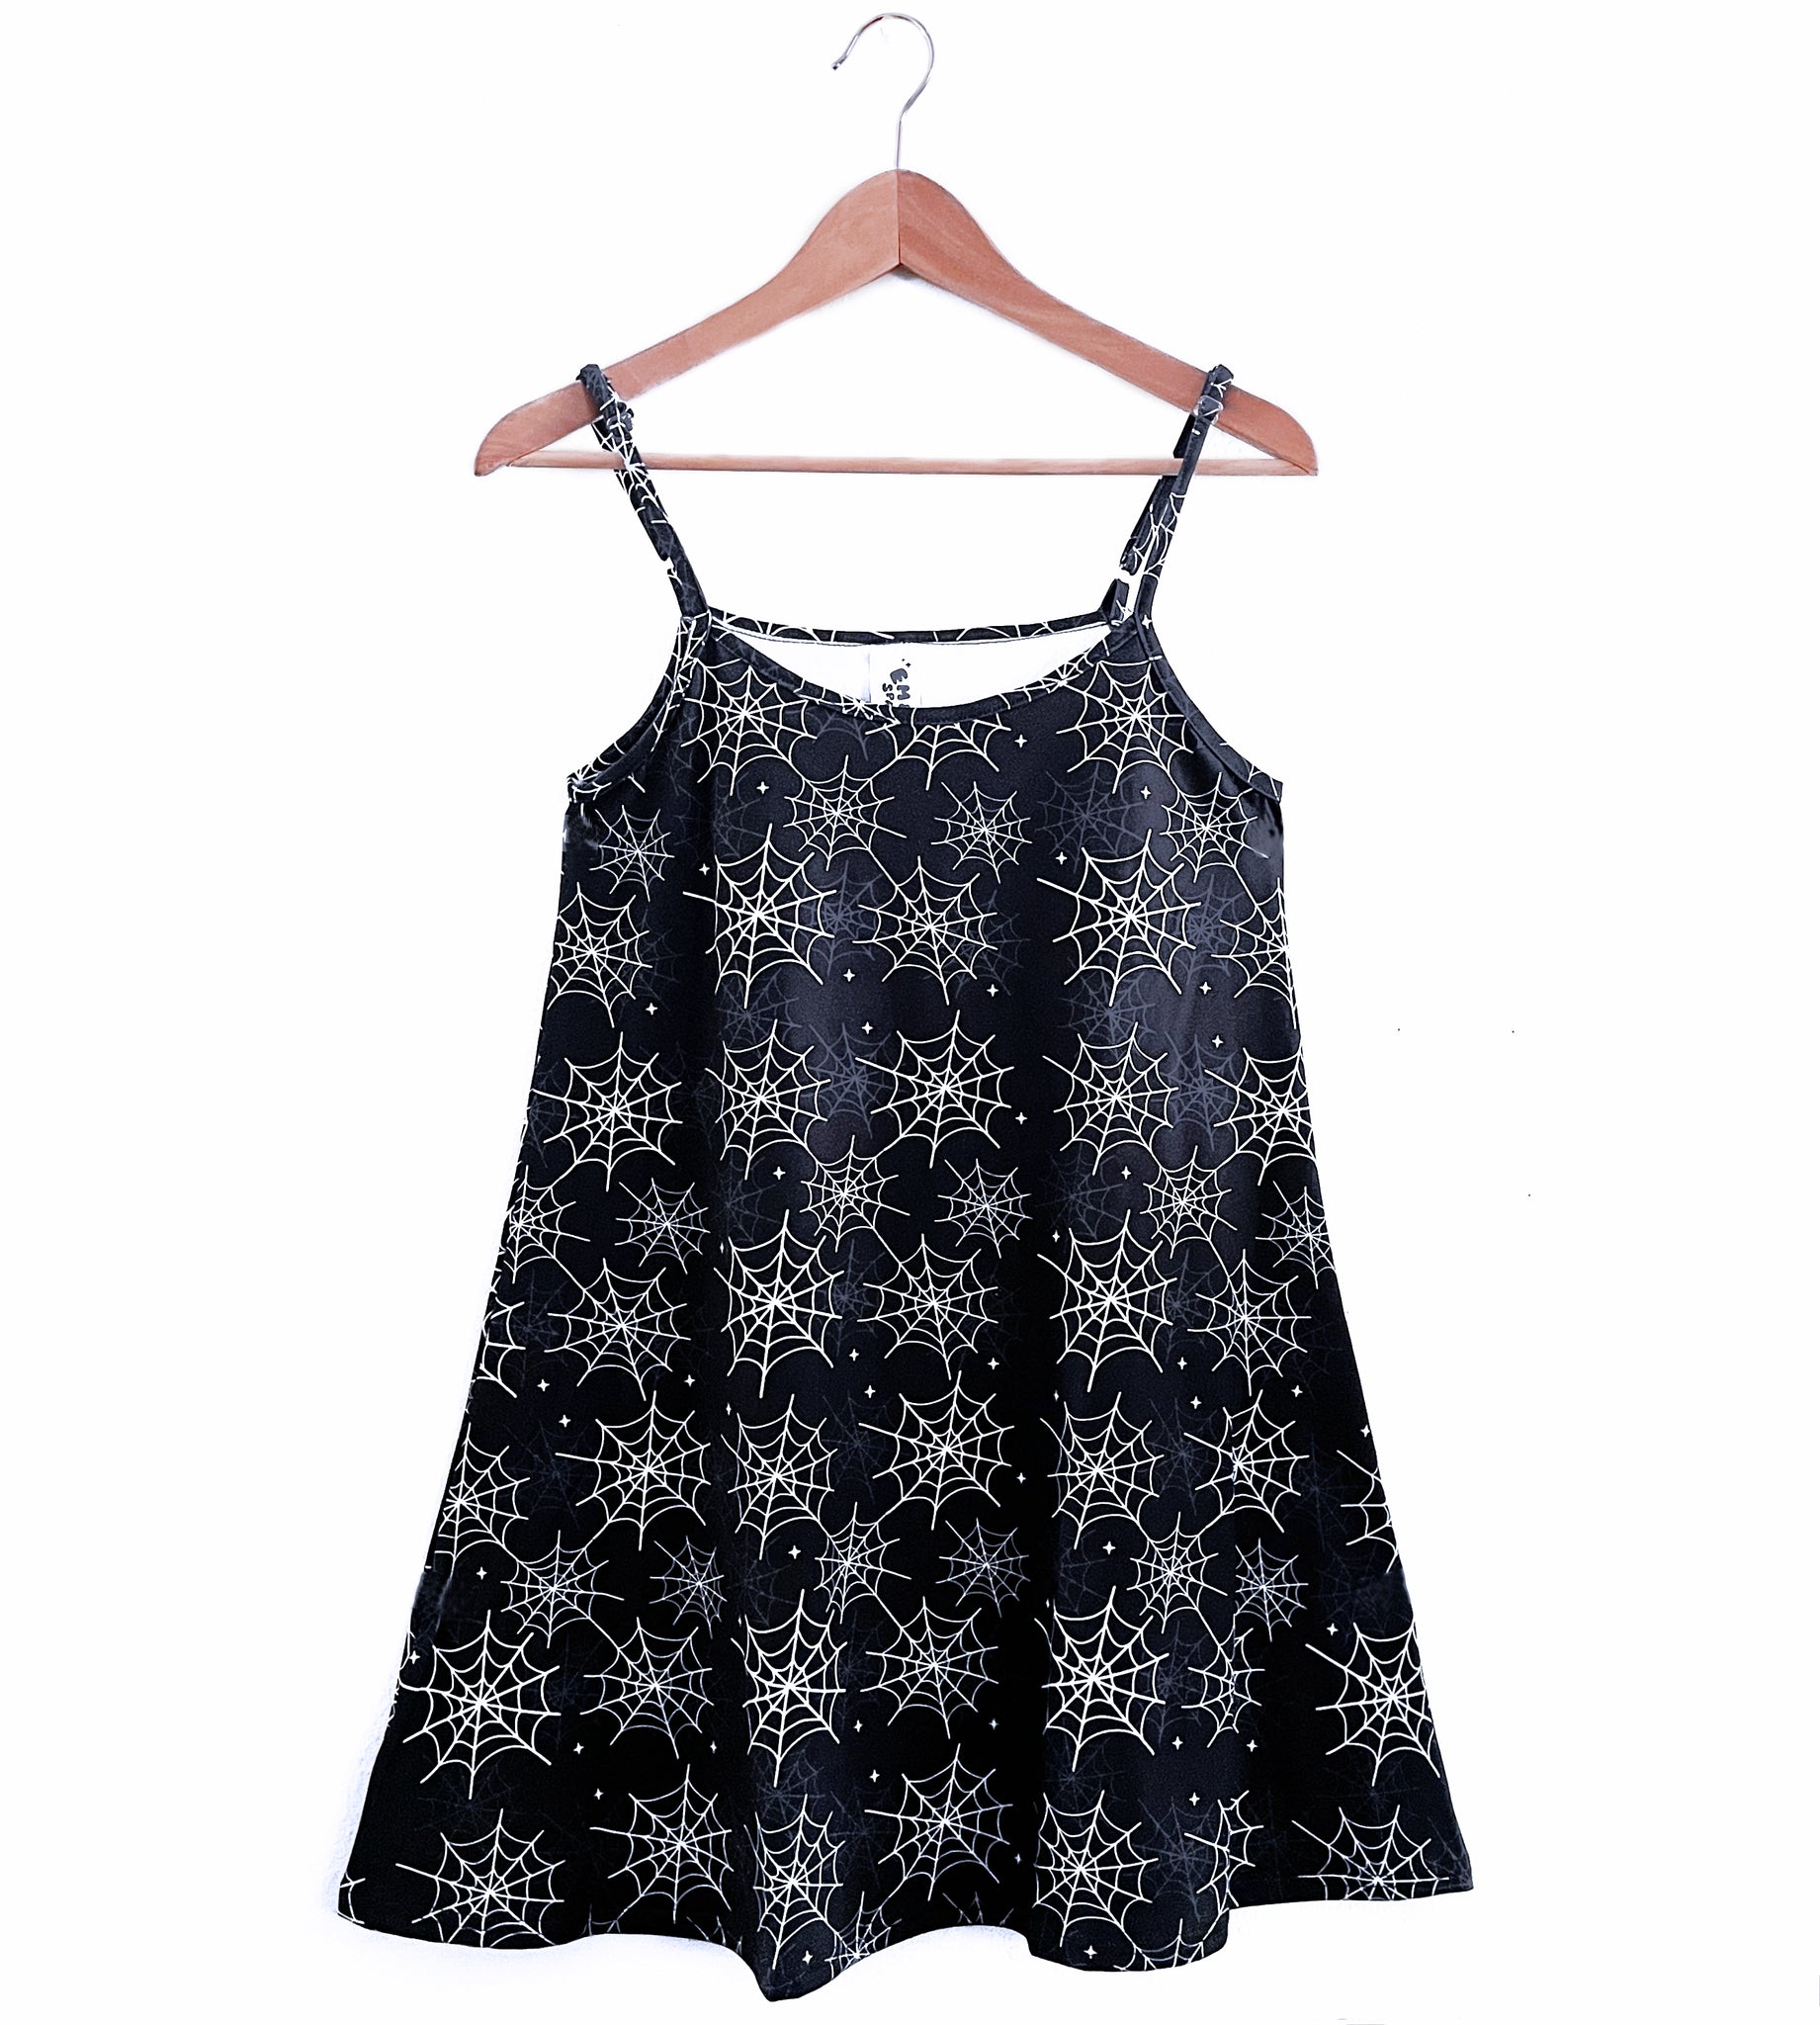 Spiderweb Strappy Night Dress - Sizes S-3X